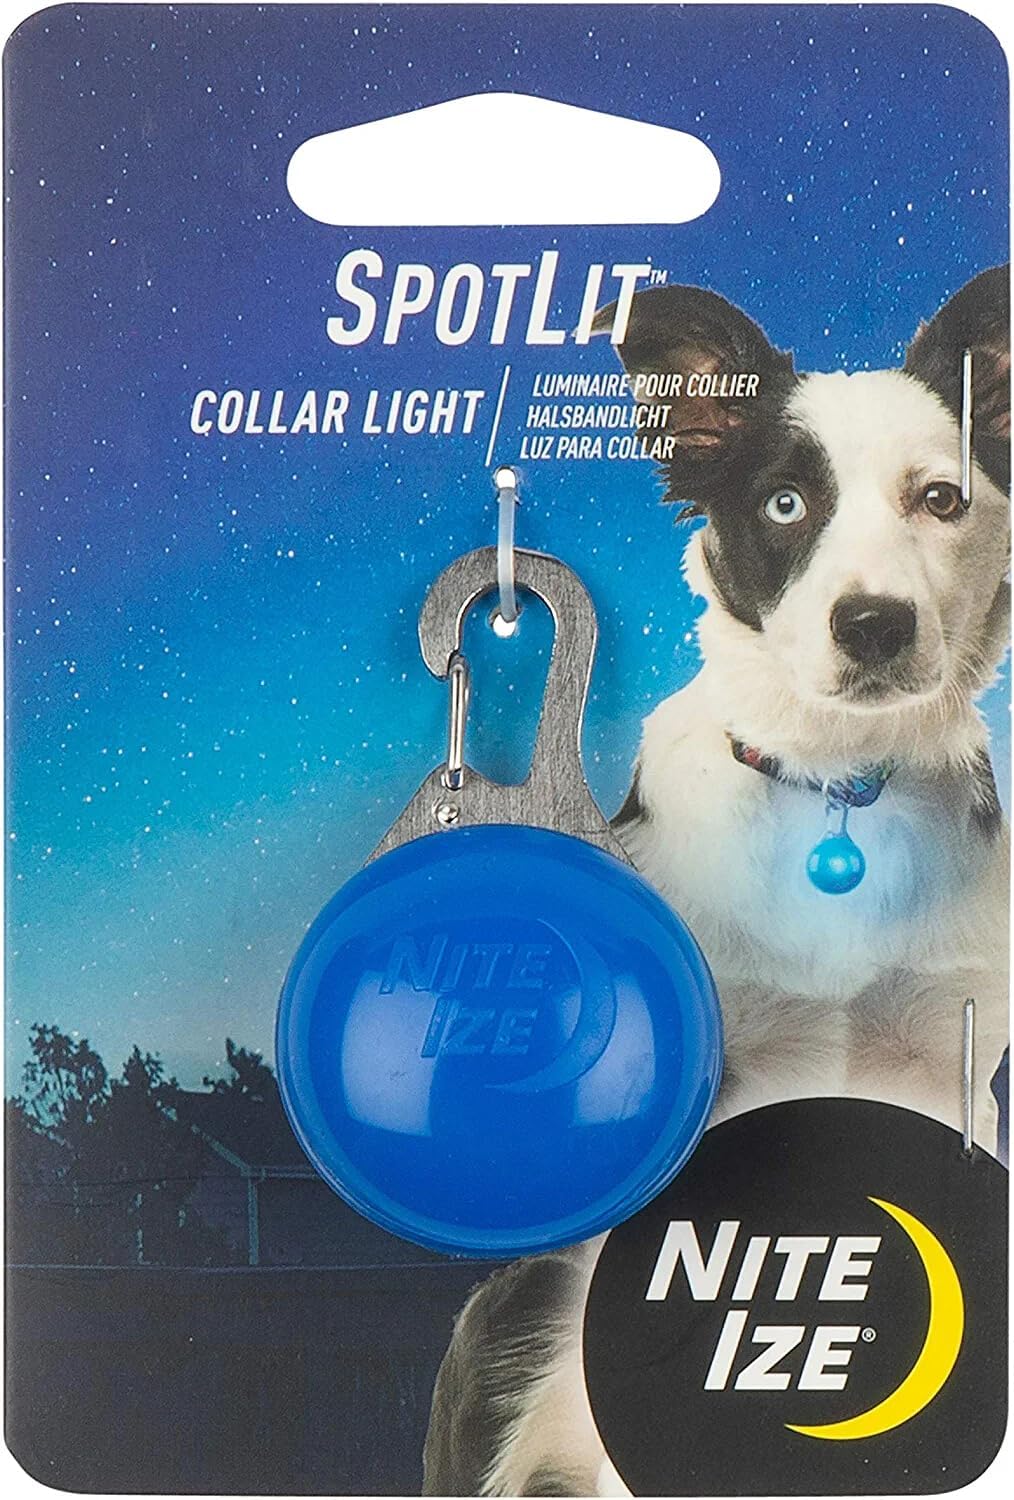 Dog Accessory Collar Spotlite Blue